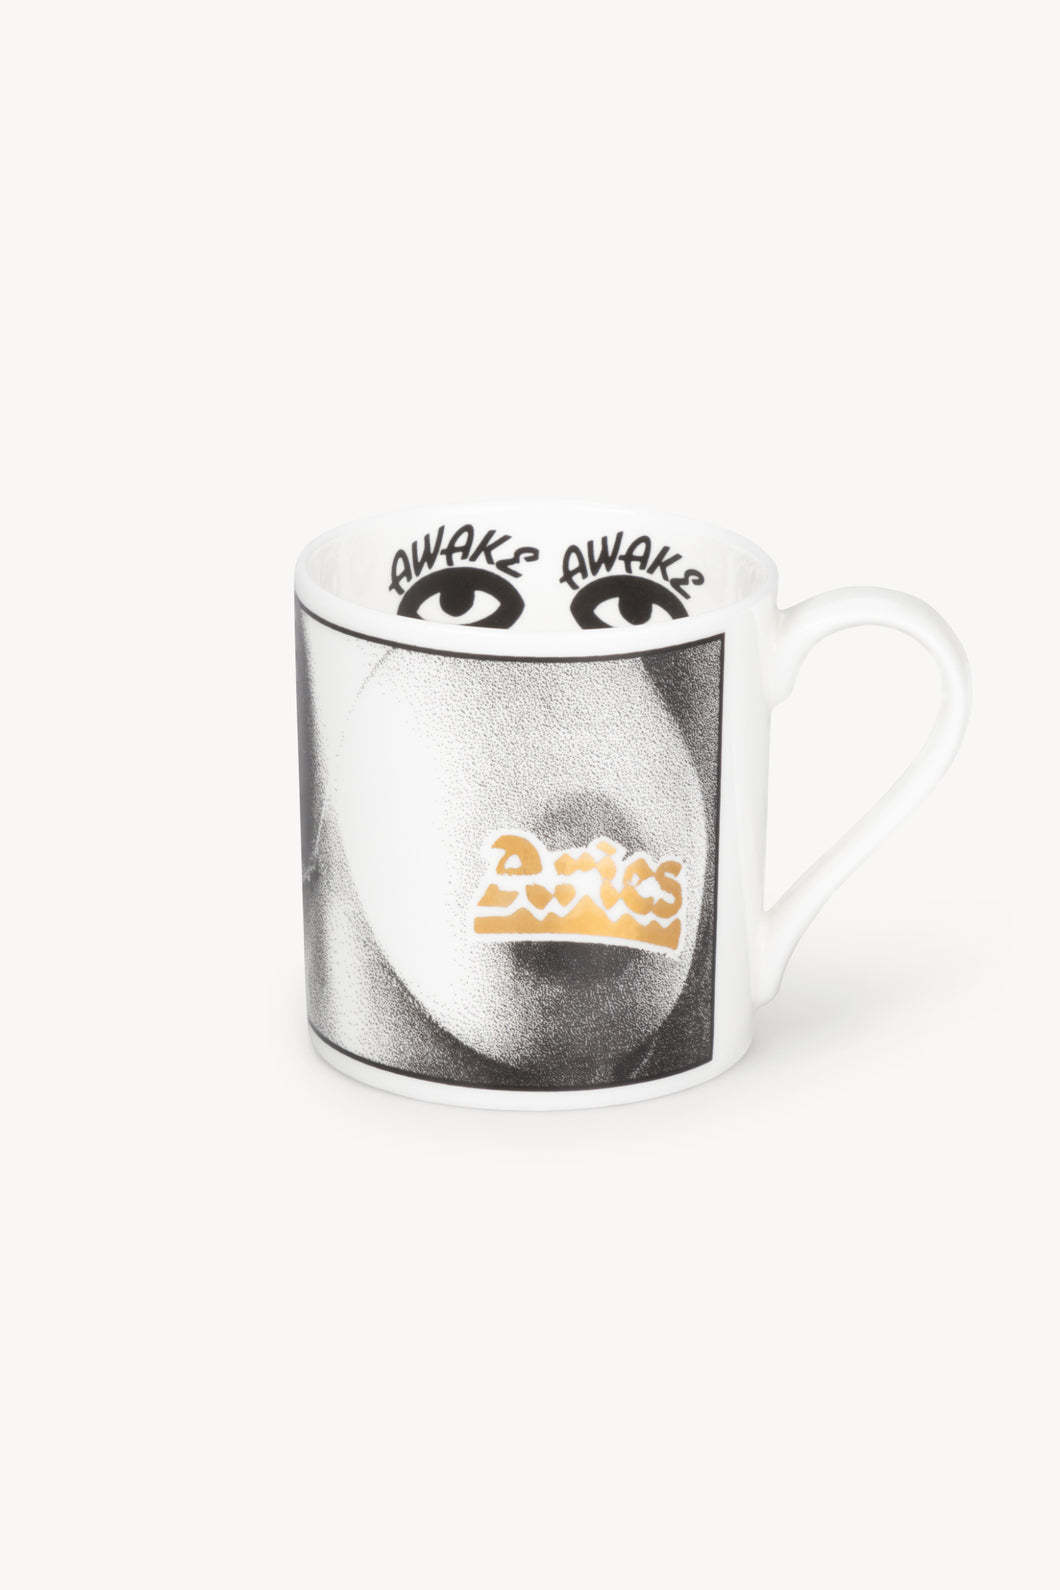 Mia Boobs Mug